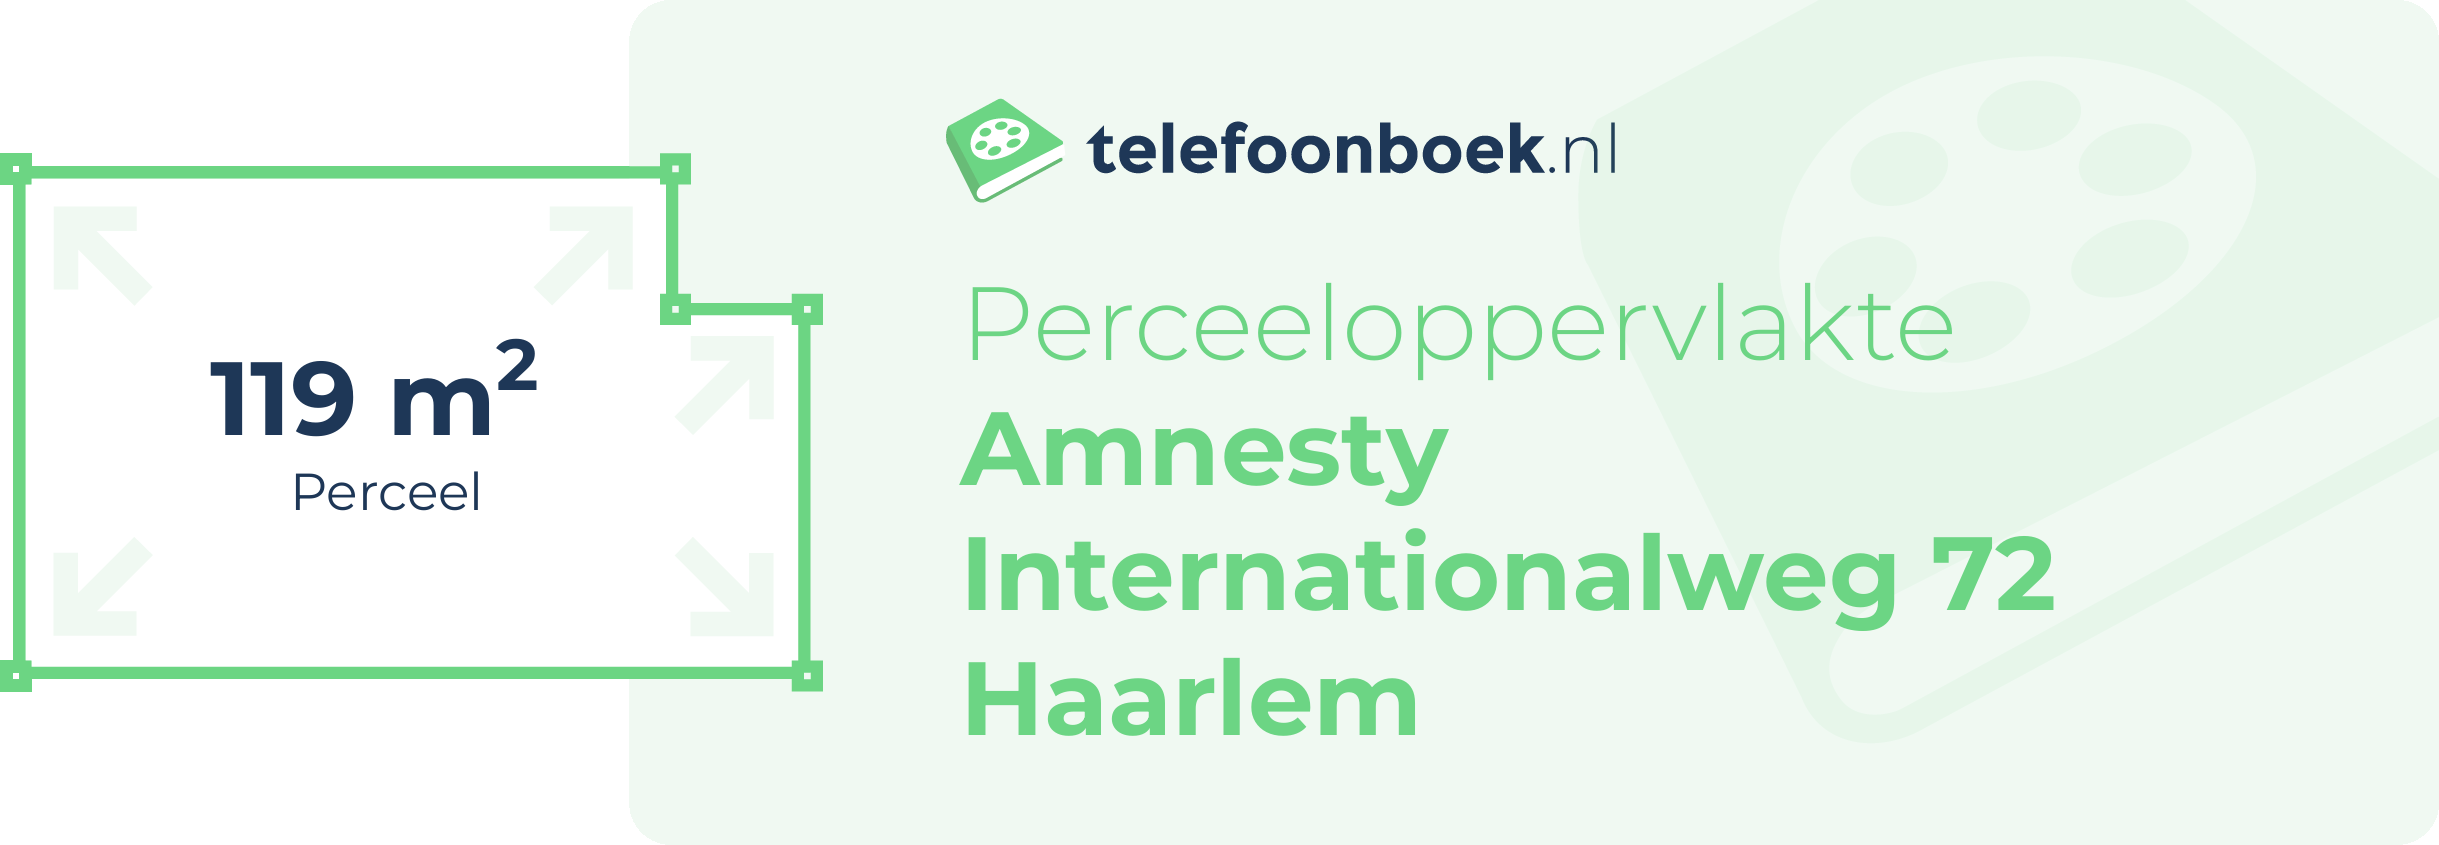 Perceeloppervlakte Amnesty Internationalweg 72 Haarlem